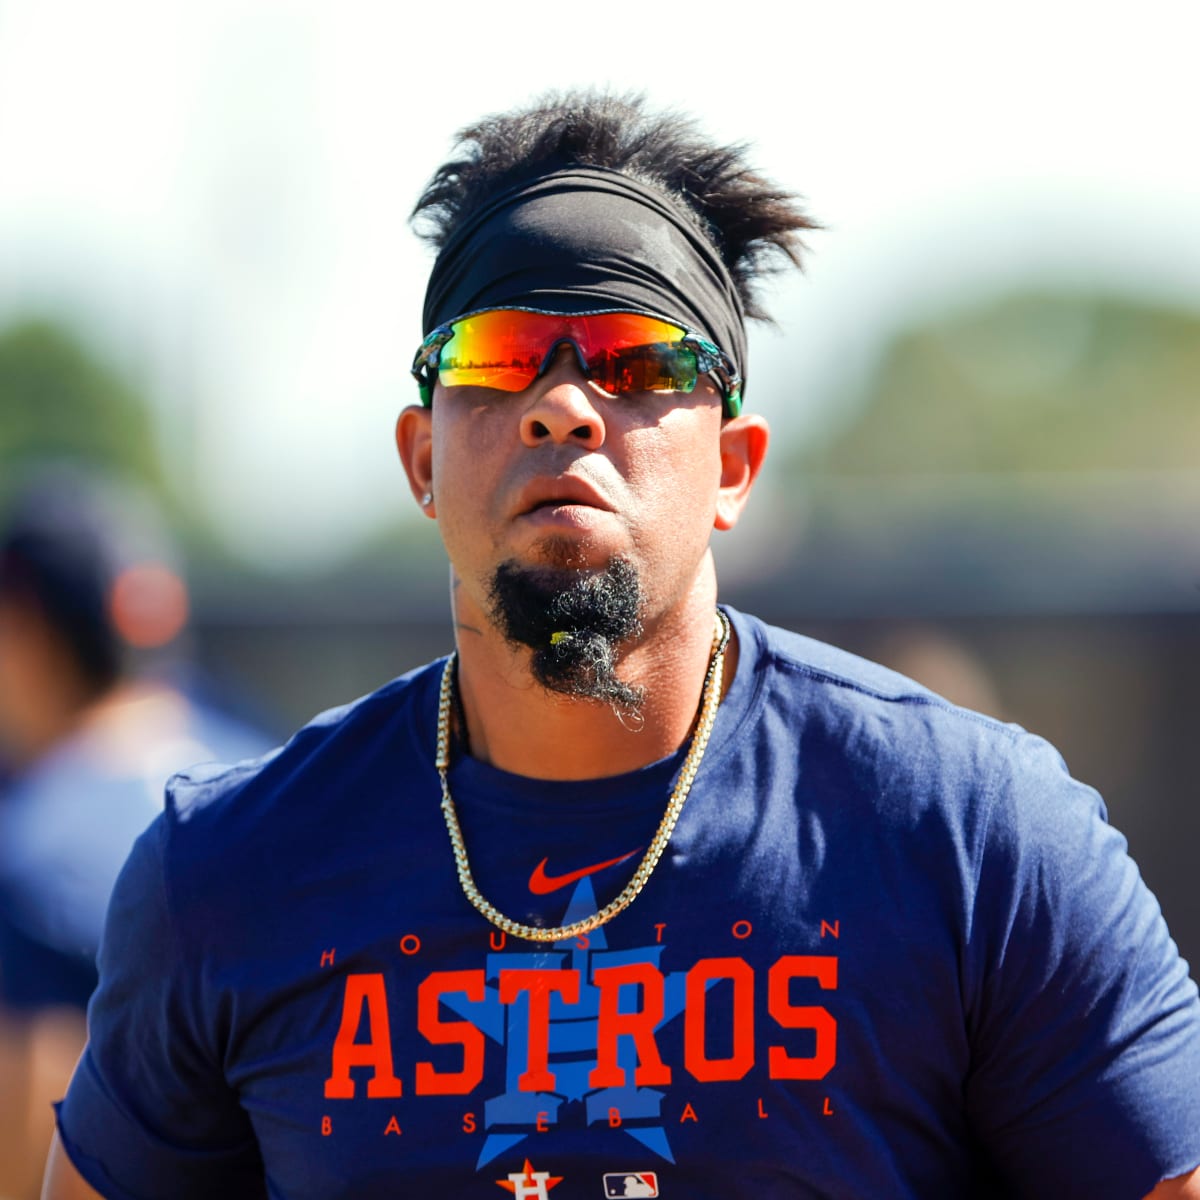 Houston Astros Sunglasses 